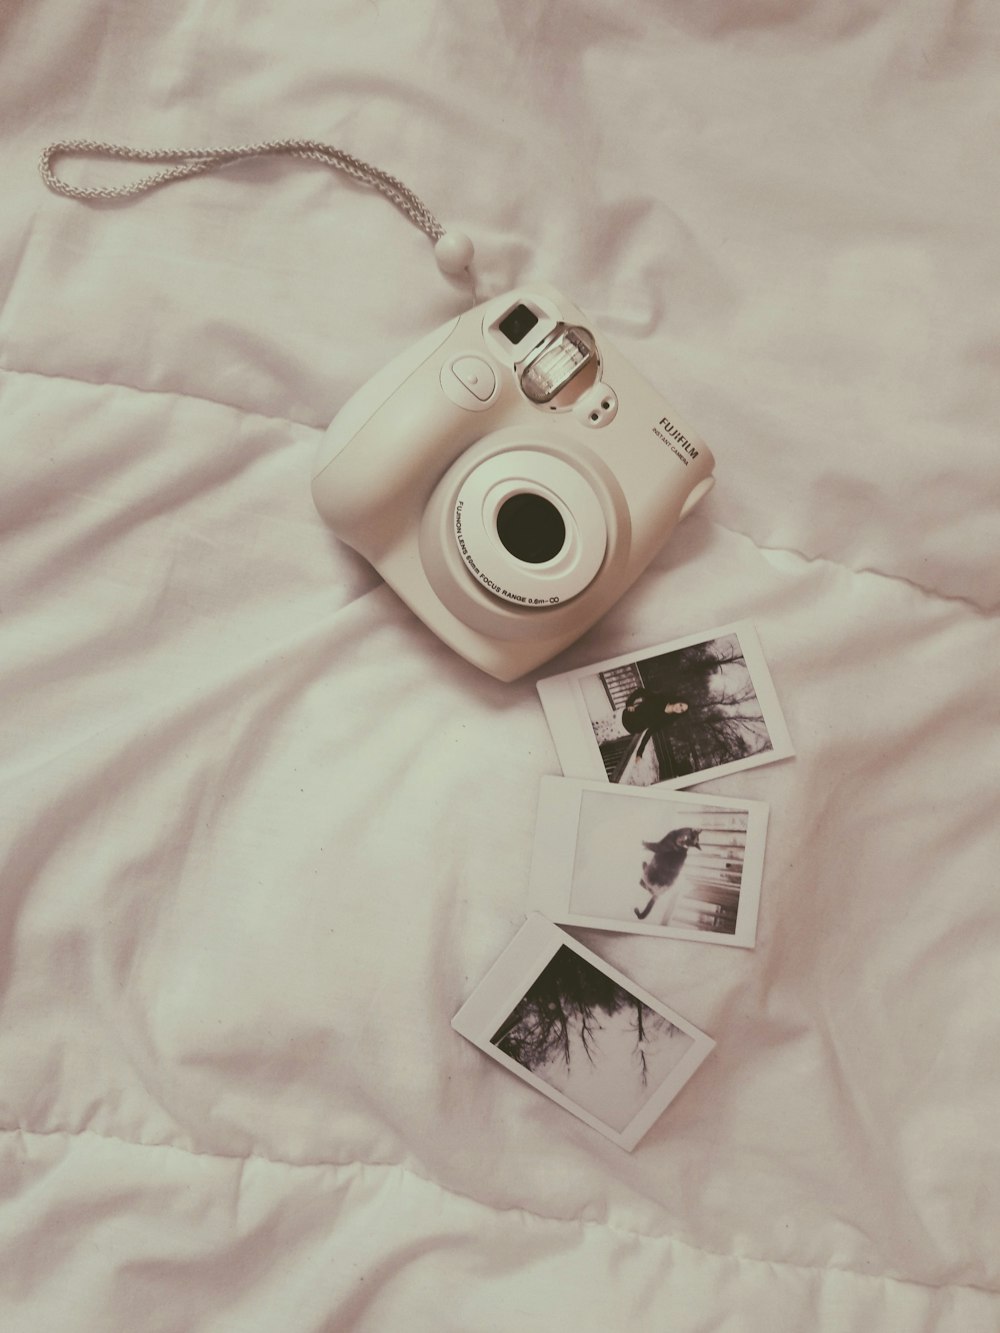 white Fujifilm instant camera on white comforter